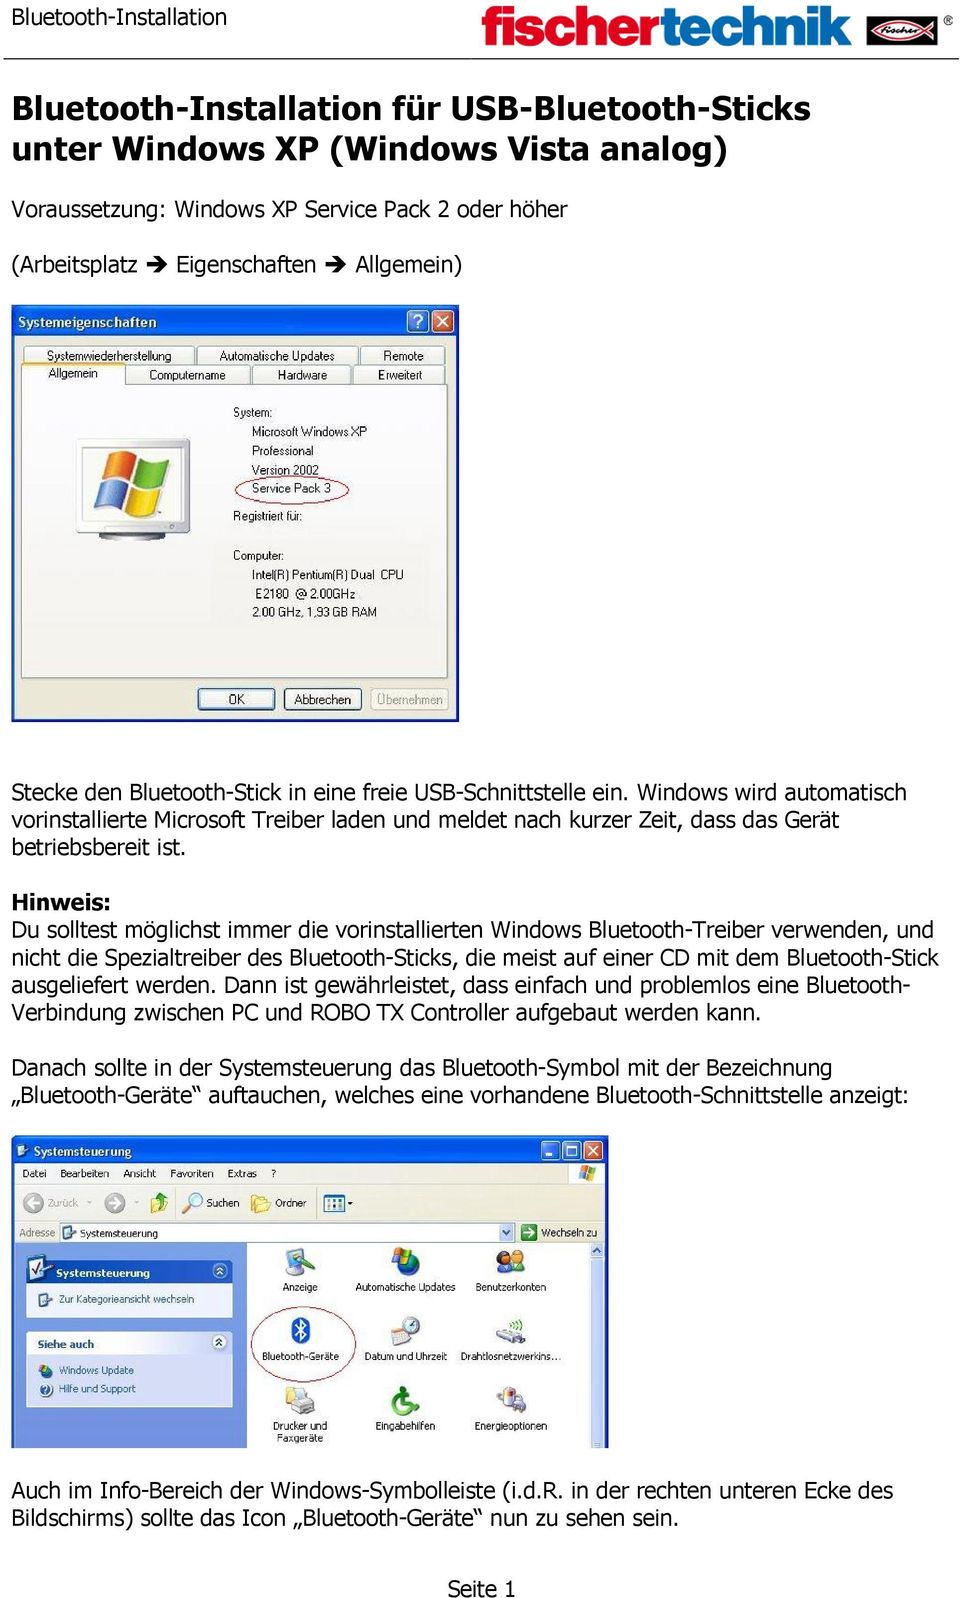 programma bluetooth activesync per windows xp service backpack 3